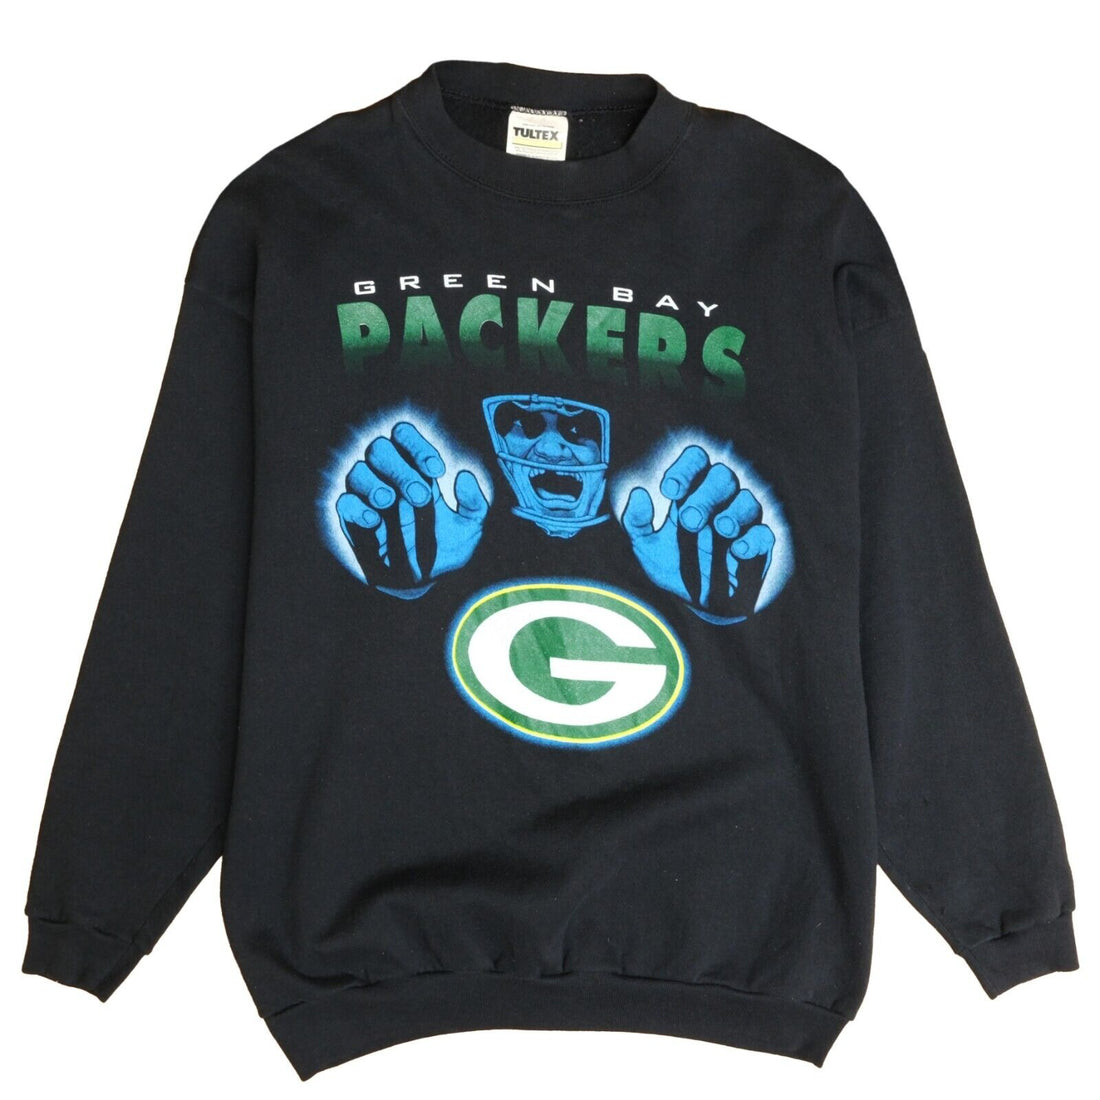 Vintage Green Bay Packers Sweatshirt Crewneck Size XL Black 90s NFL